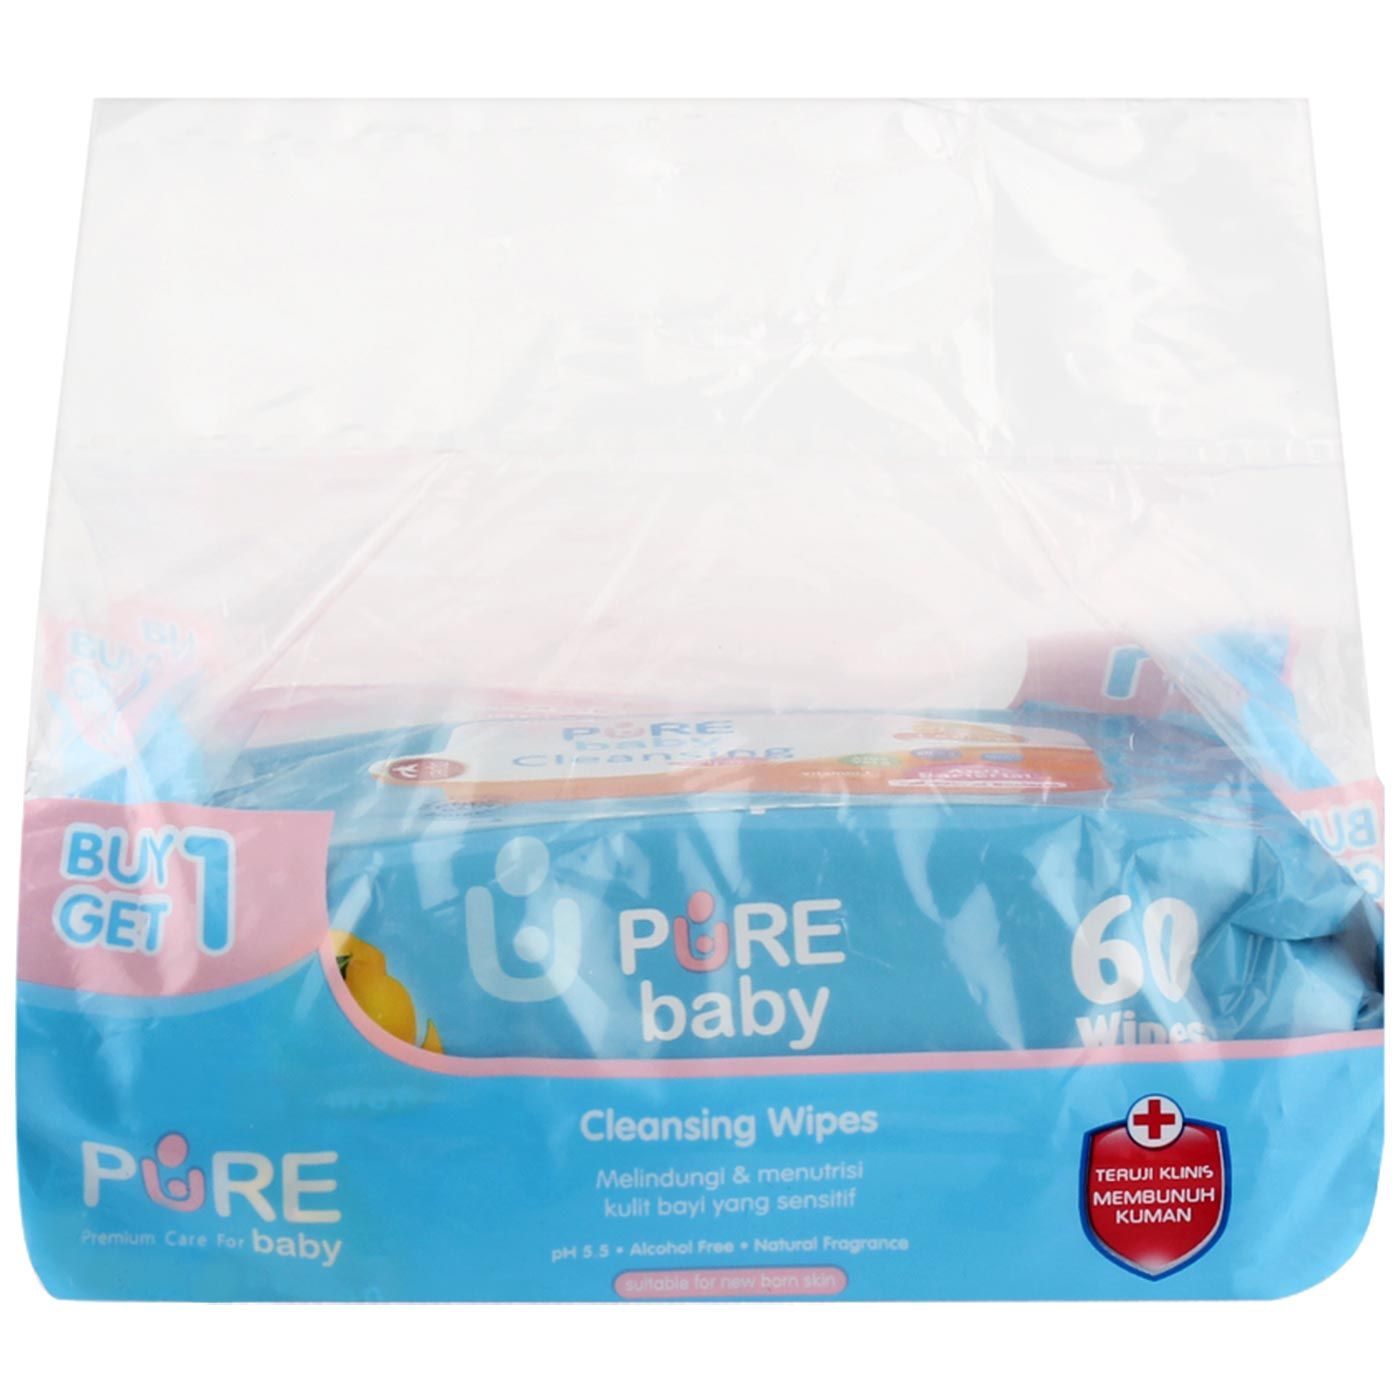 Pure Baby Cleansing Wipes Buy1Get1 Lemon 60's - 1